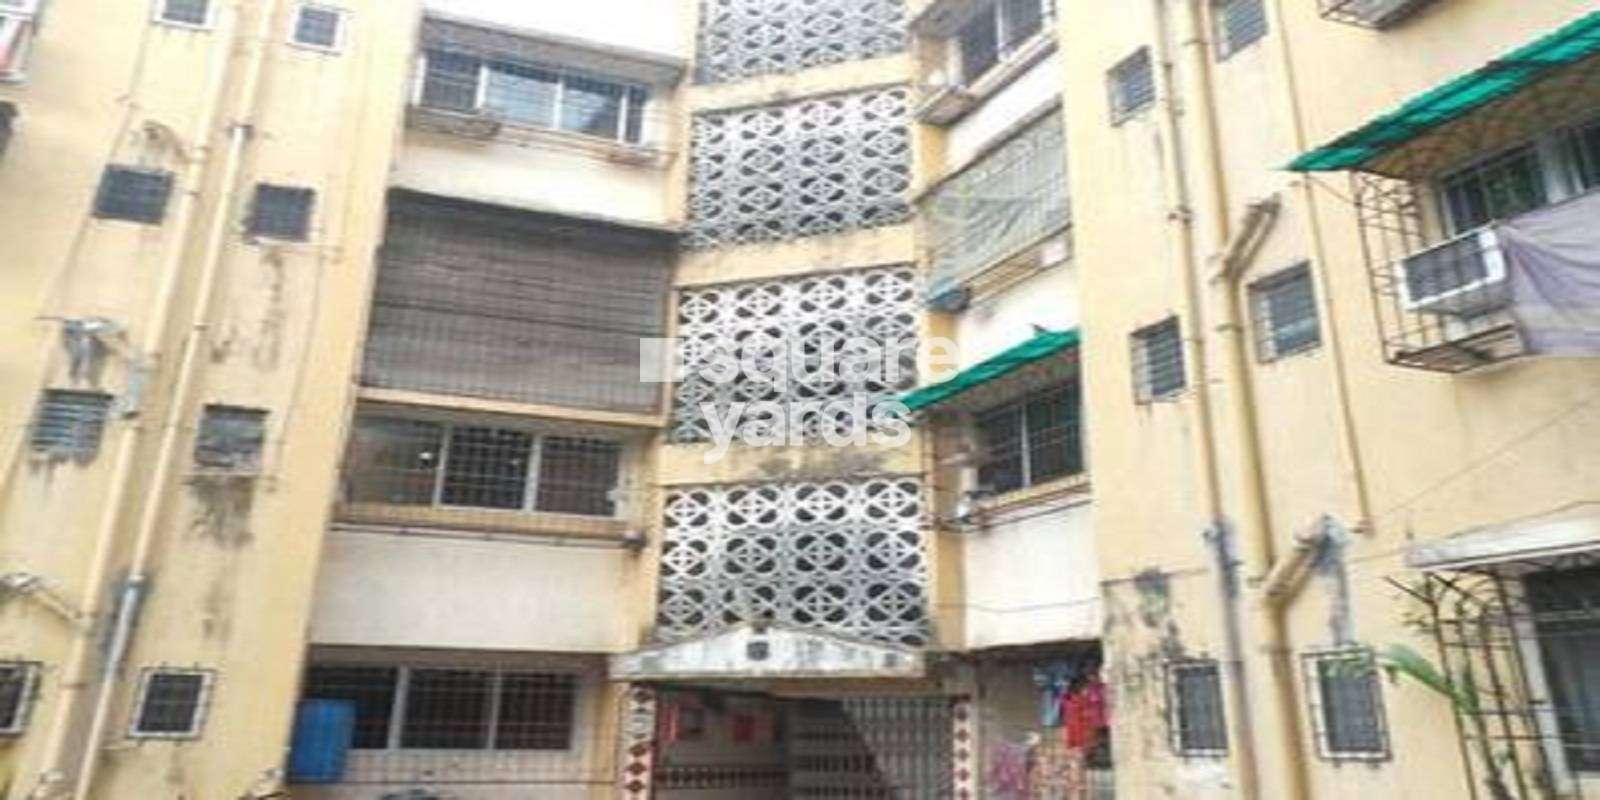 Shree Vimalnath Apartment Cover Image